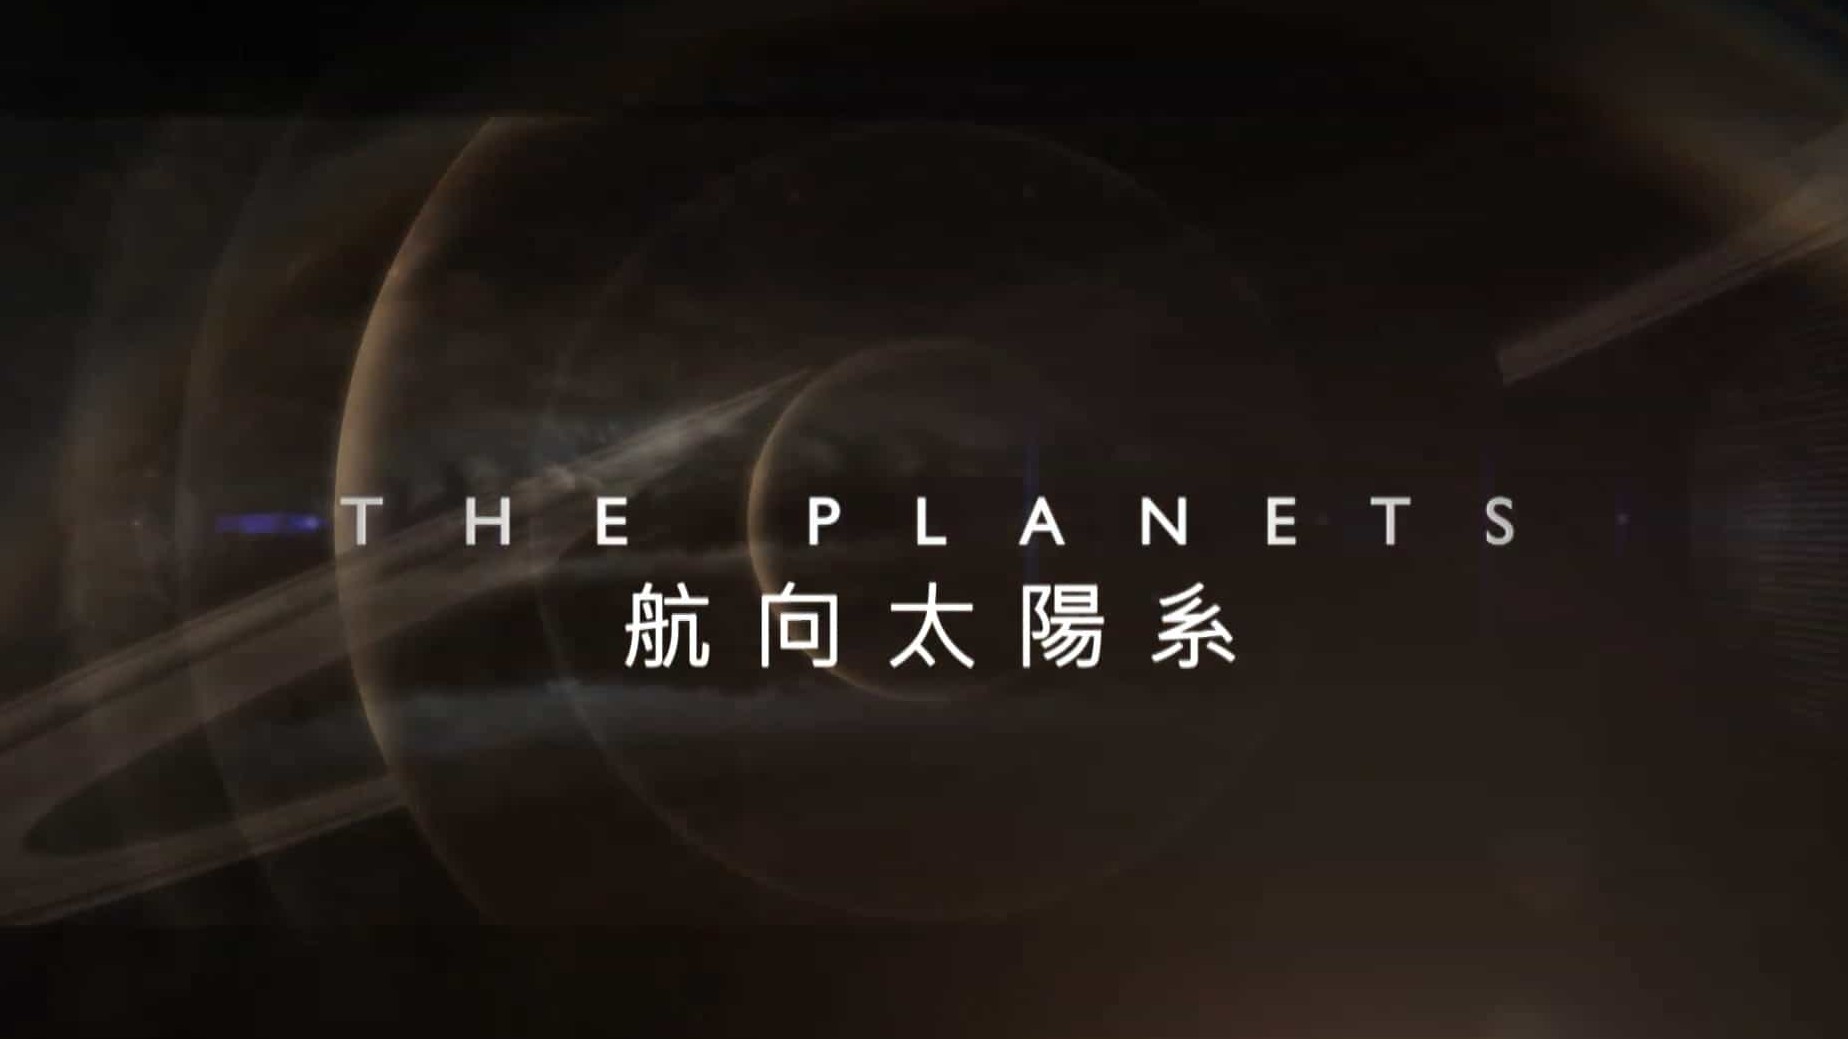 BBC纪录片/宇宙探索纪录片《航向太阳系/行星 The Planets》全5集 国语中字 PTS公视配音版  1080P高清下载